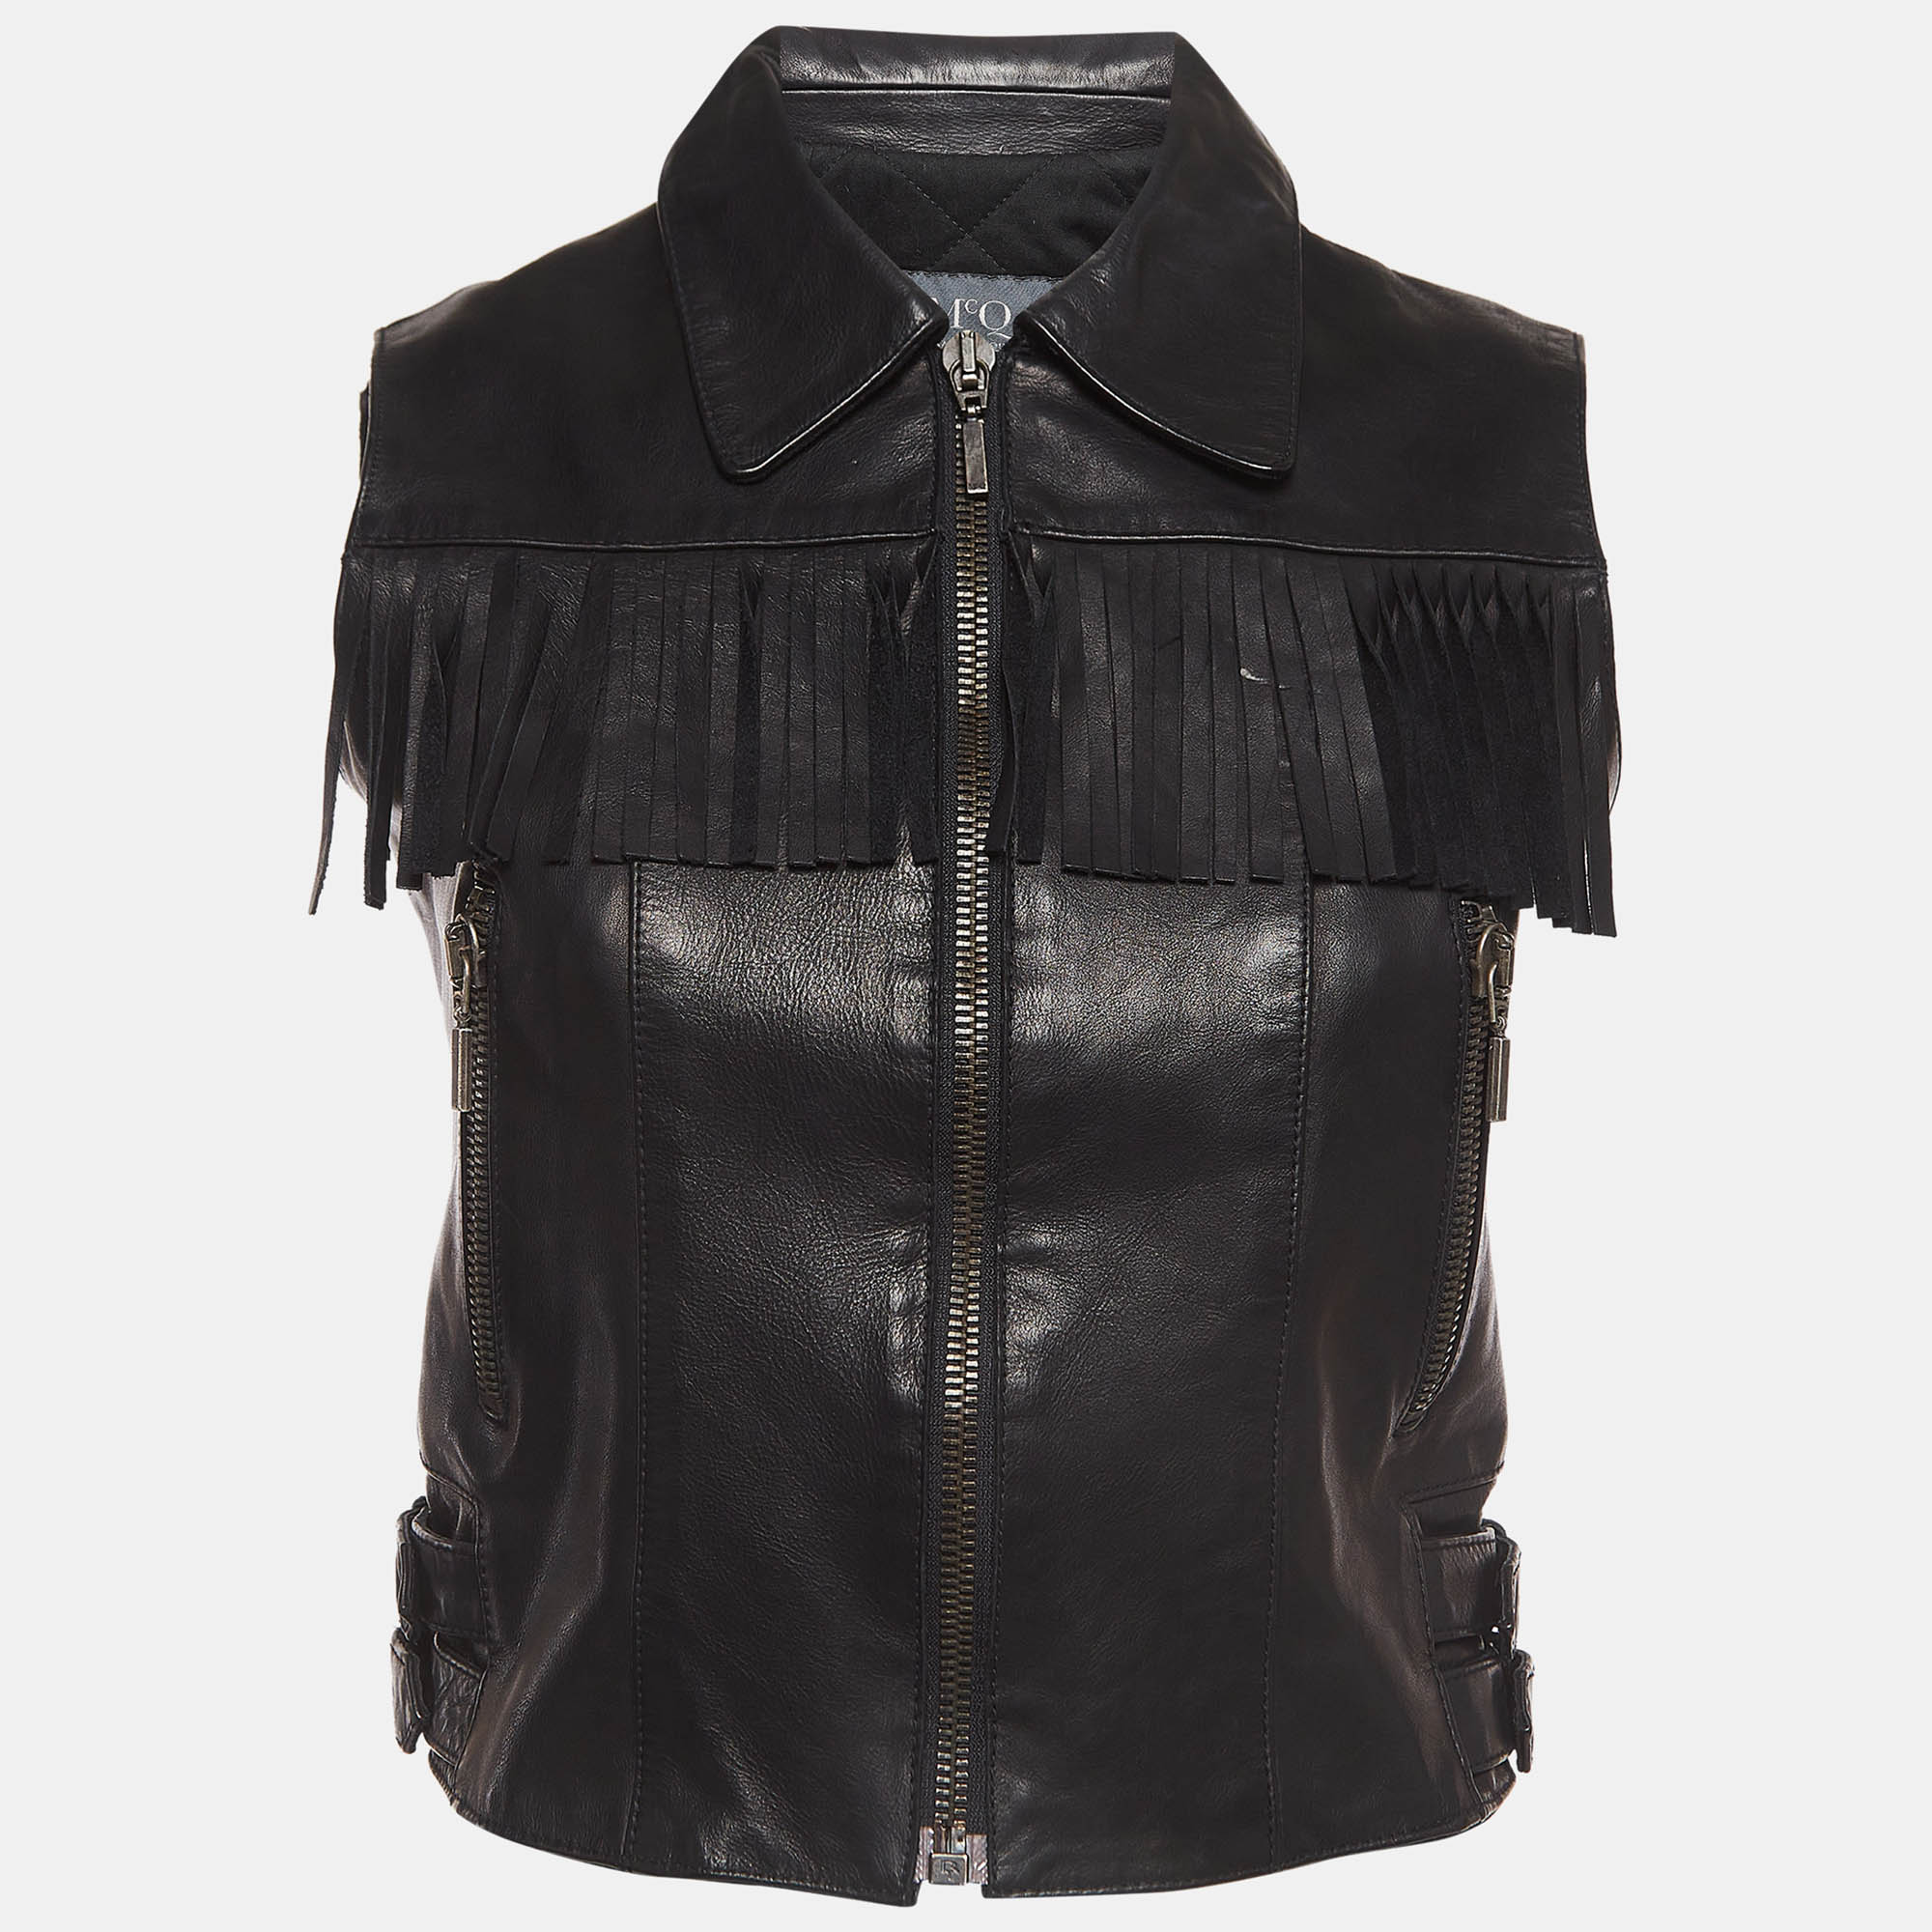 

McQ by Alexander McQueen Black Leather Fringe Detailed Vest